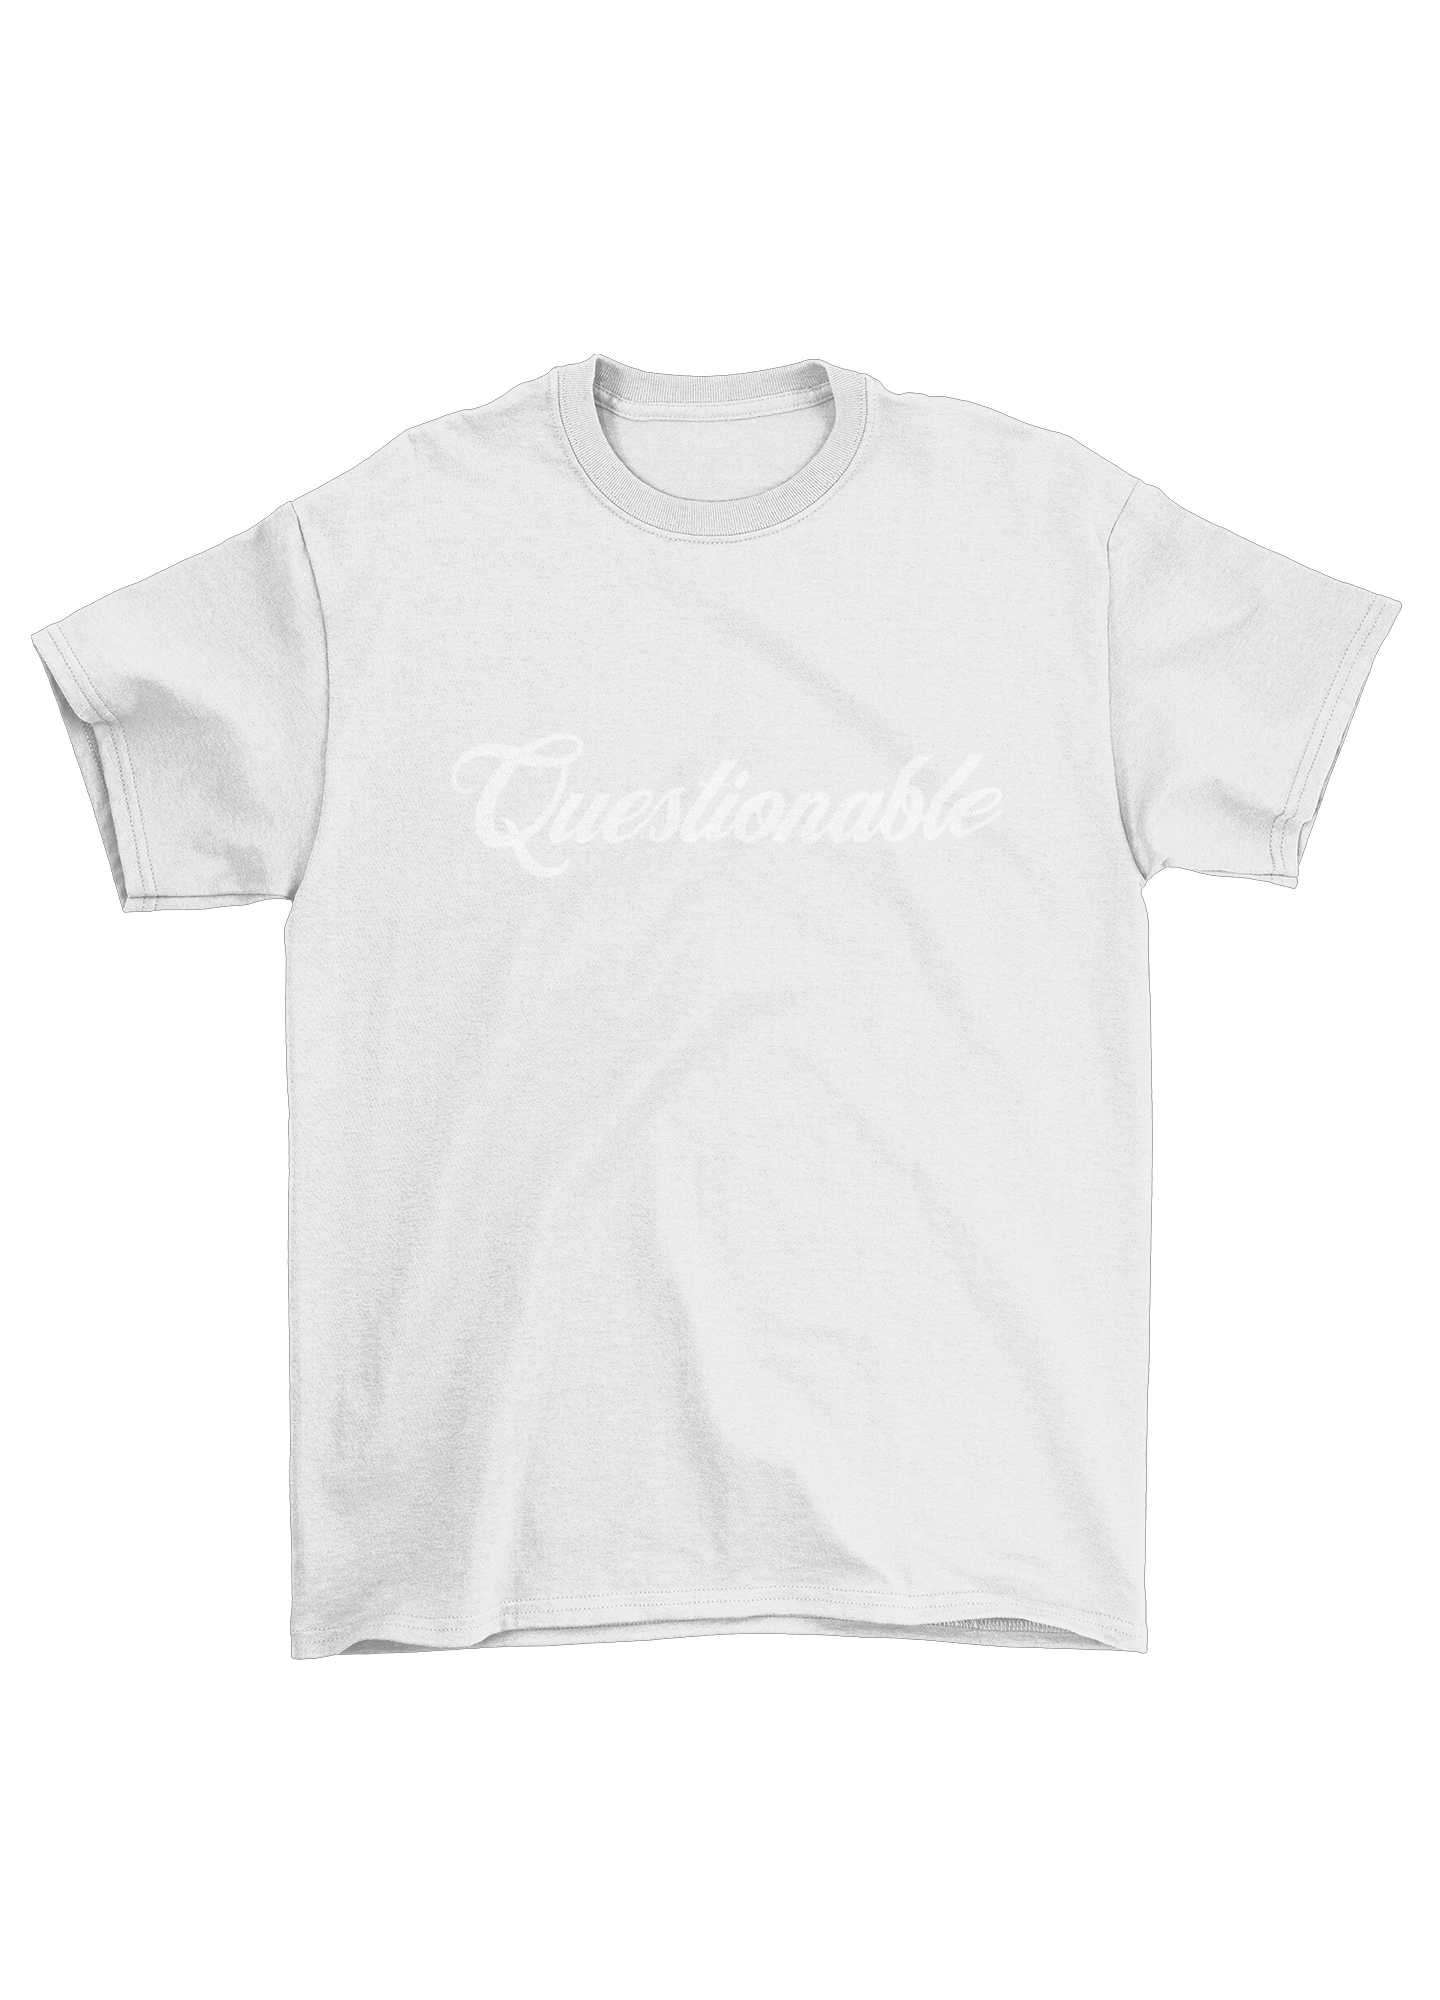 Questionable™ T-Shirt (Blackout & Whiteout)